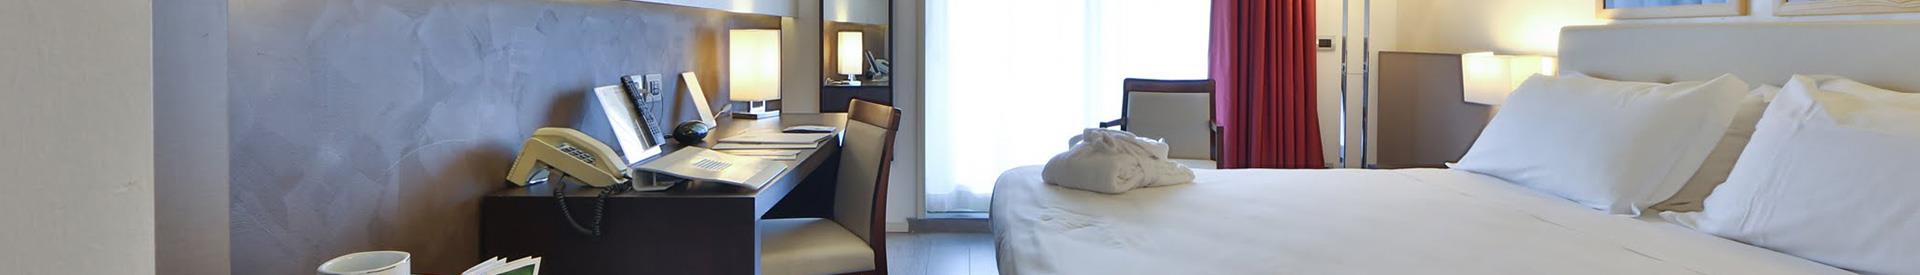 comfort room at the Best Western Plus Hotel Modena Resort